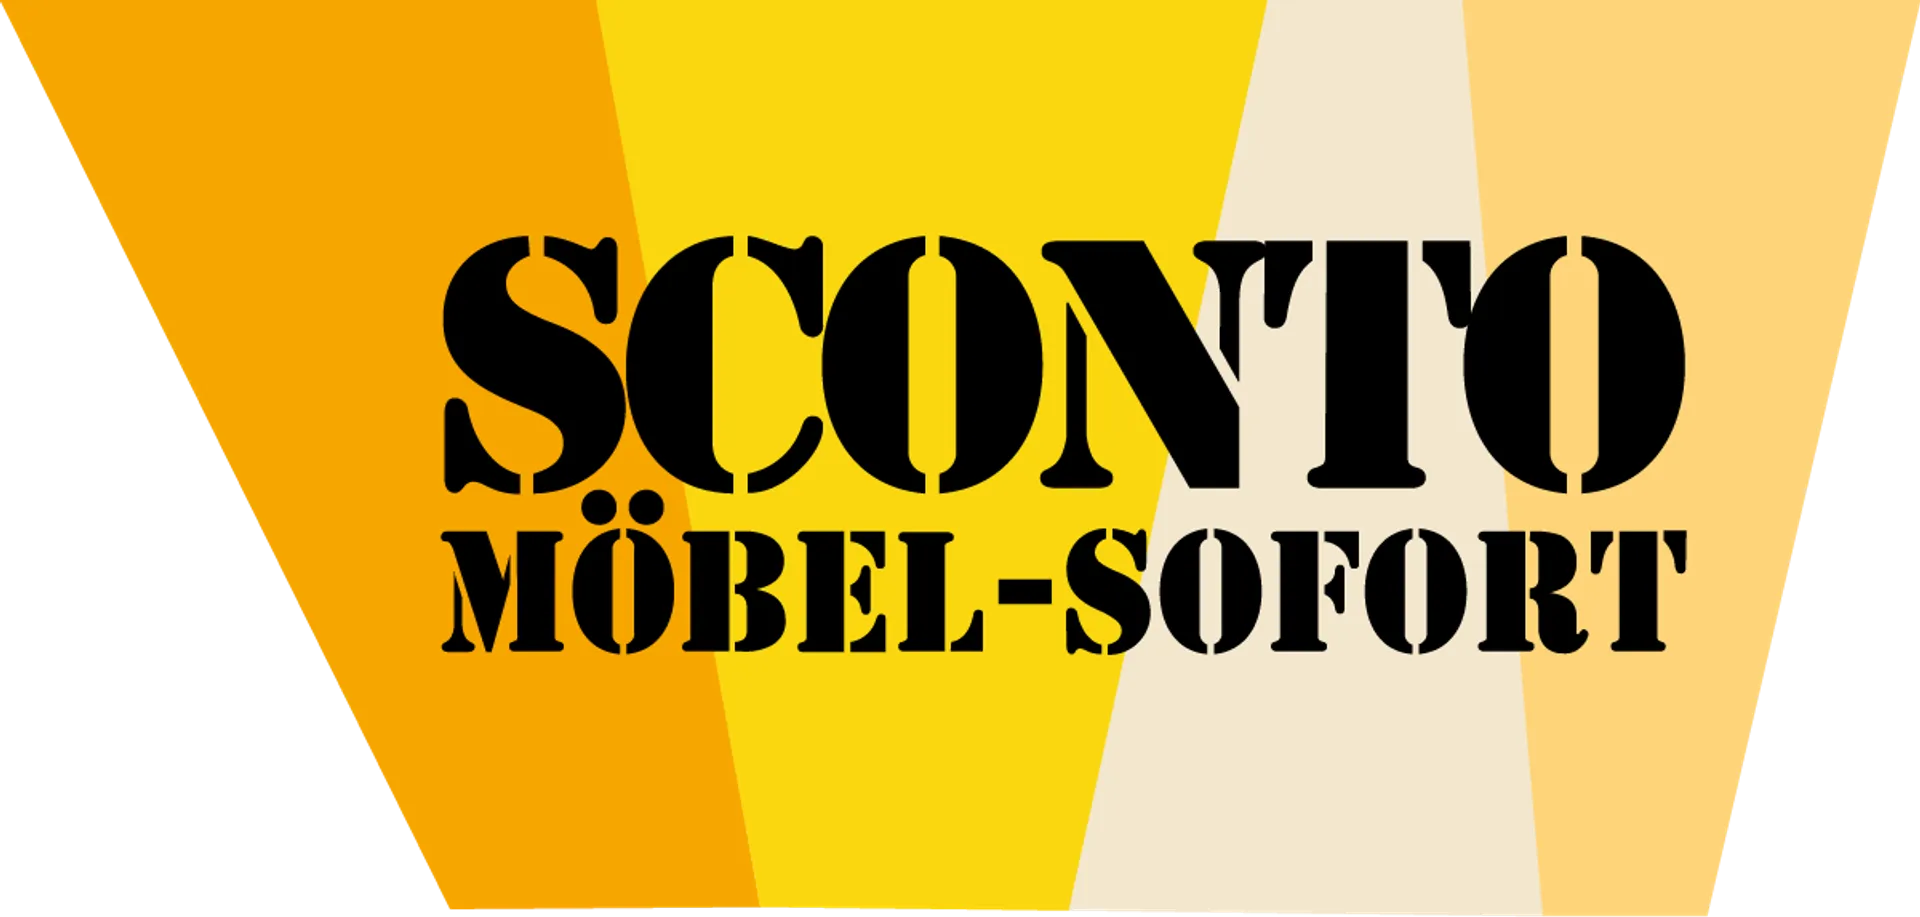 SCONTO logo